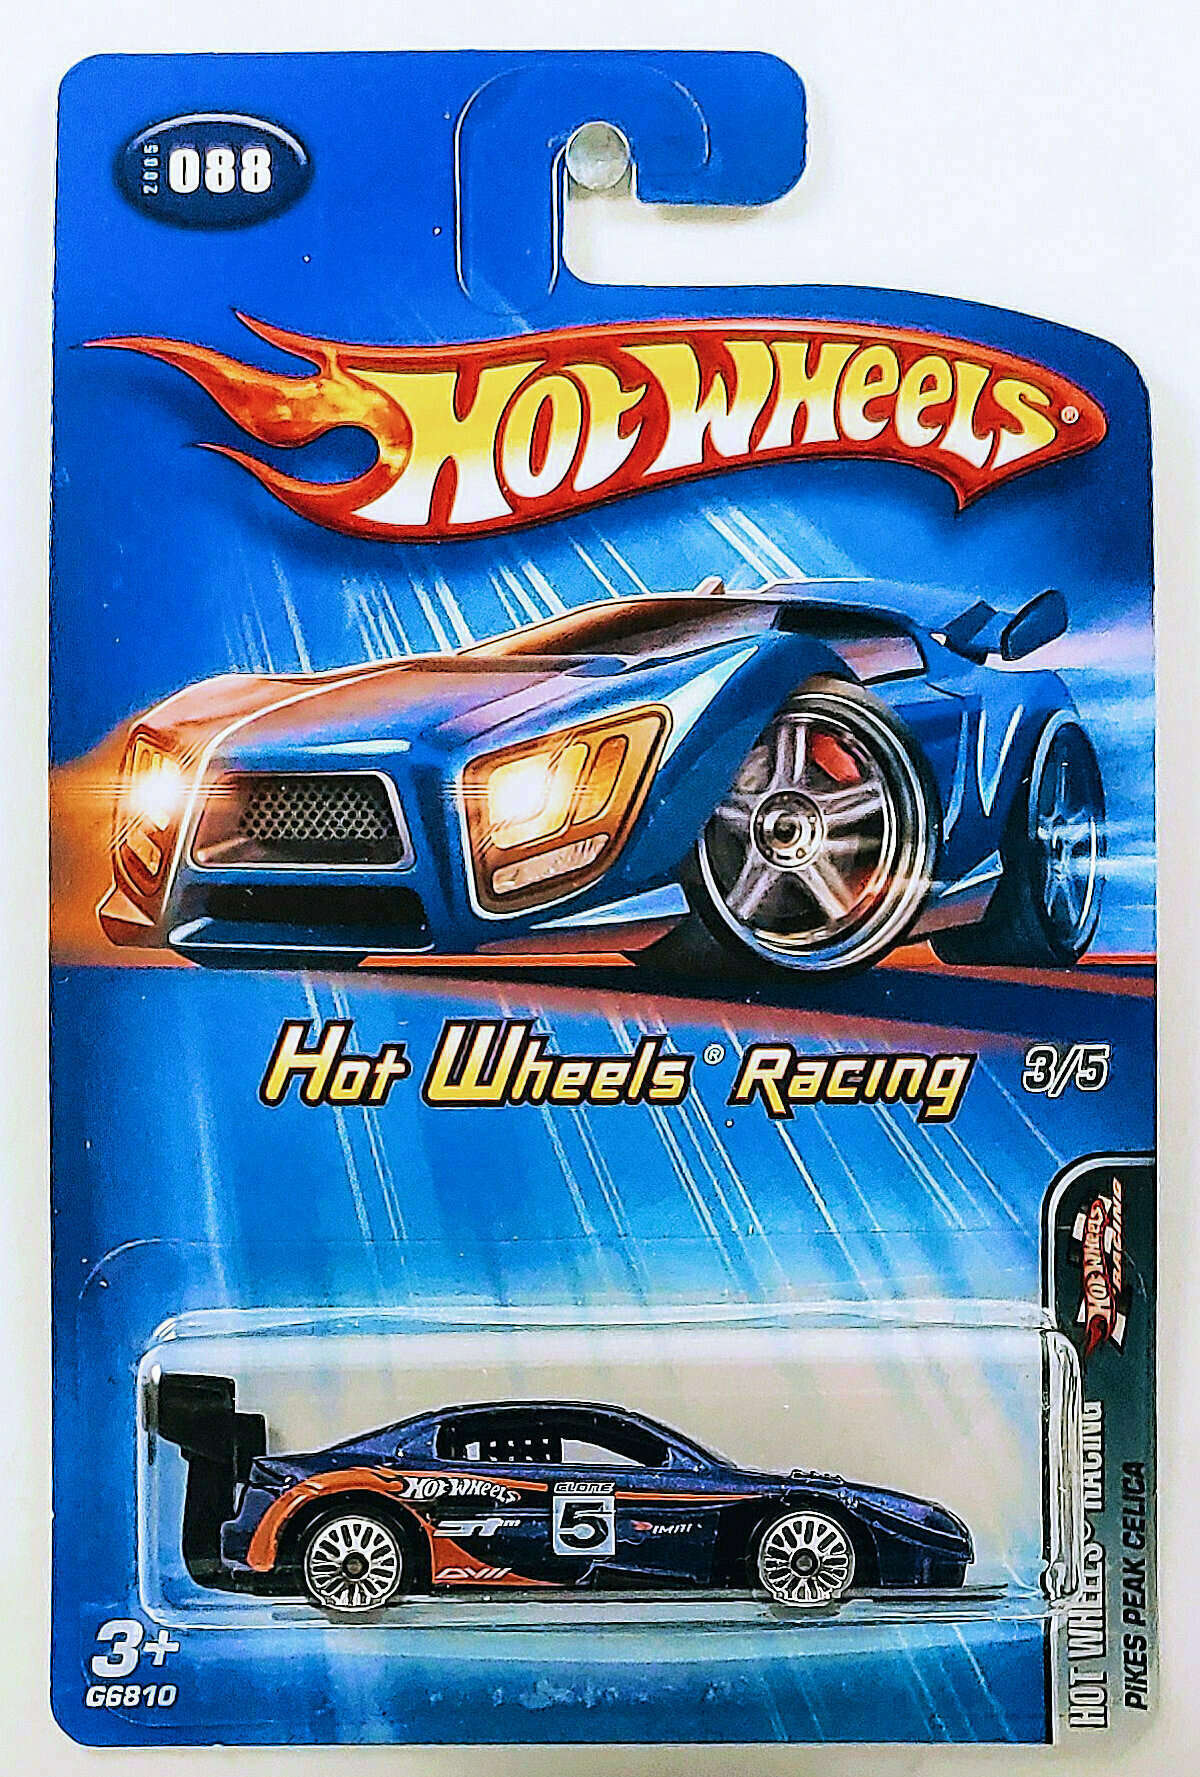 Hot Wheels 2005 - Collector # 088/183 - Hot Wheels Racing 3/5 - Pikes Peak Celica - Blue / #5 - USA '05